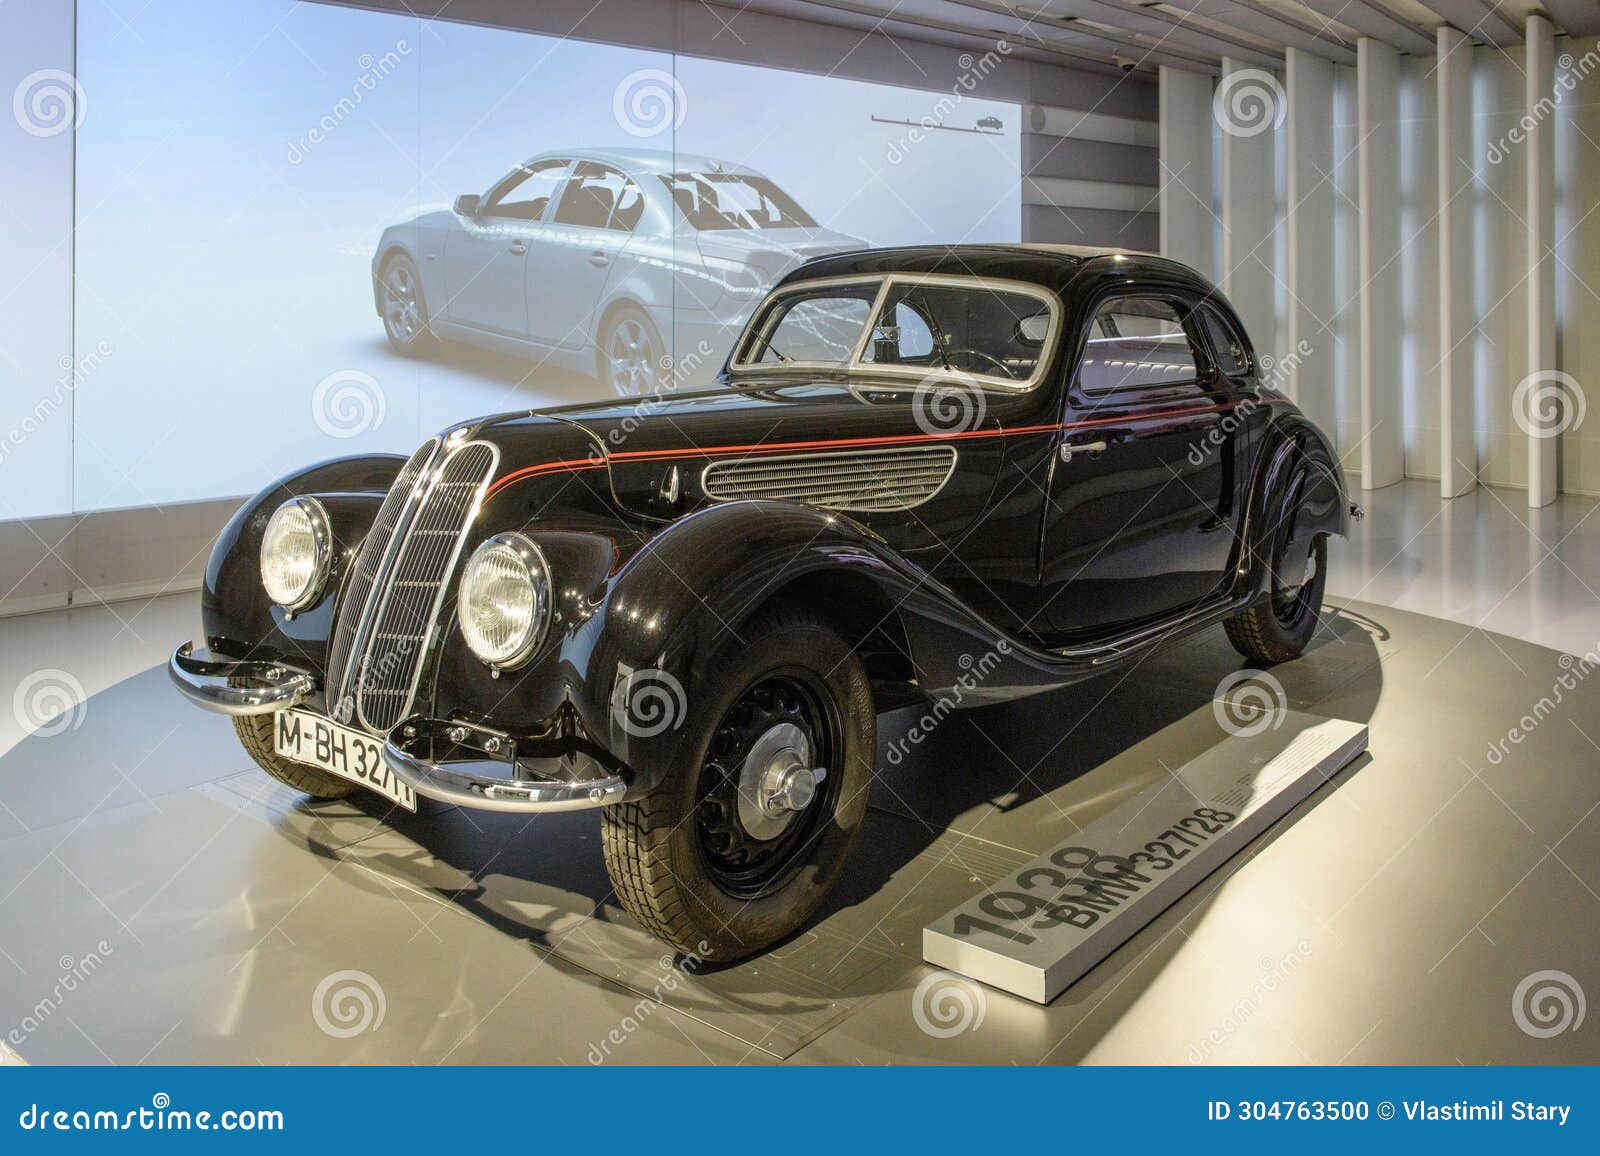 Pre-war BMW 327 28 Elegant Car from 1938 at the BMW Museum Munich ...